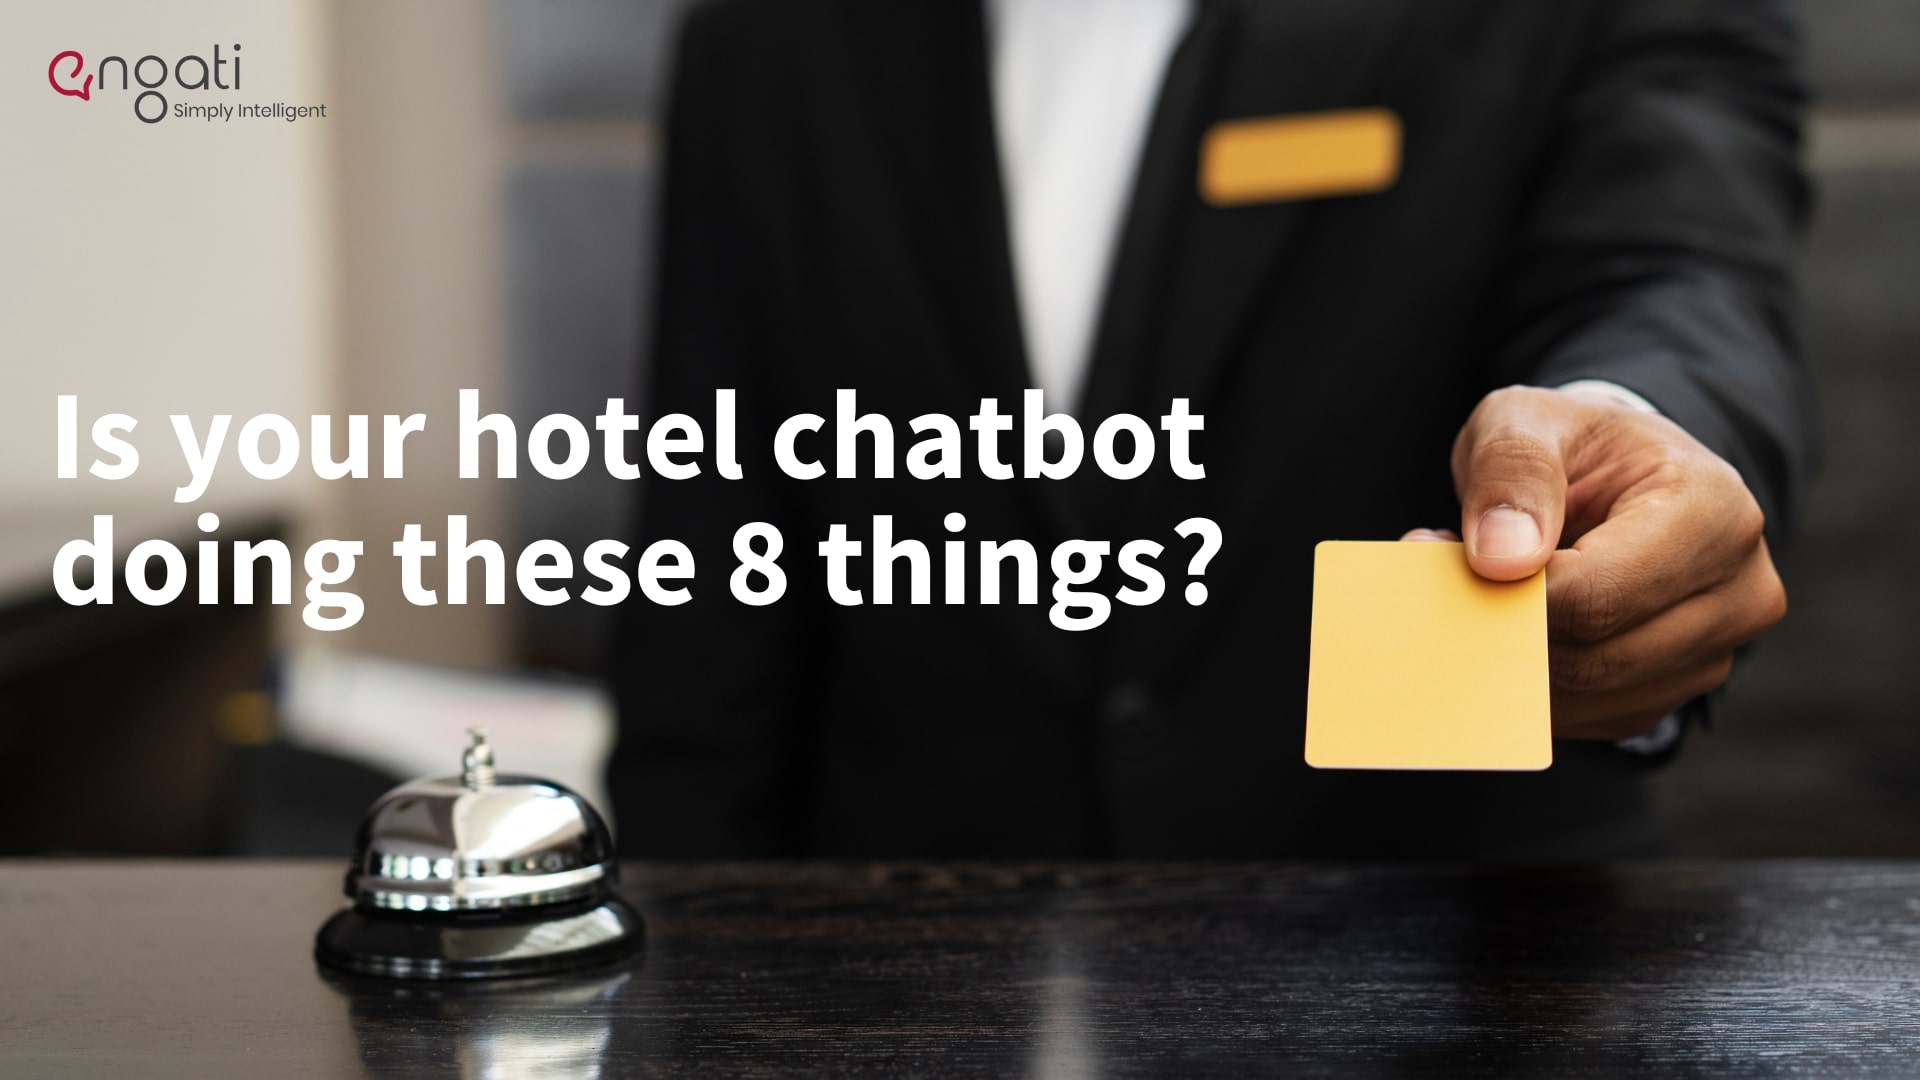 Hotel chatbots